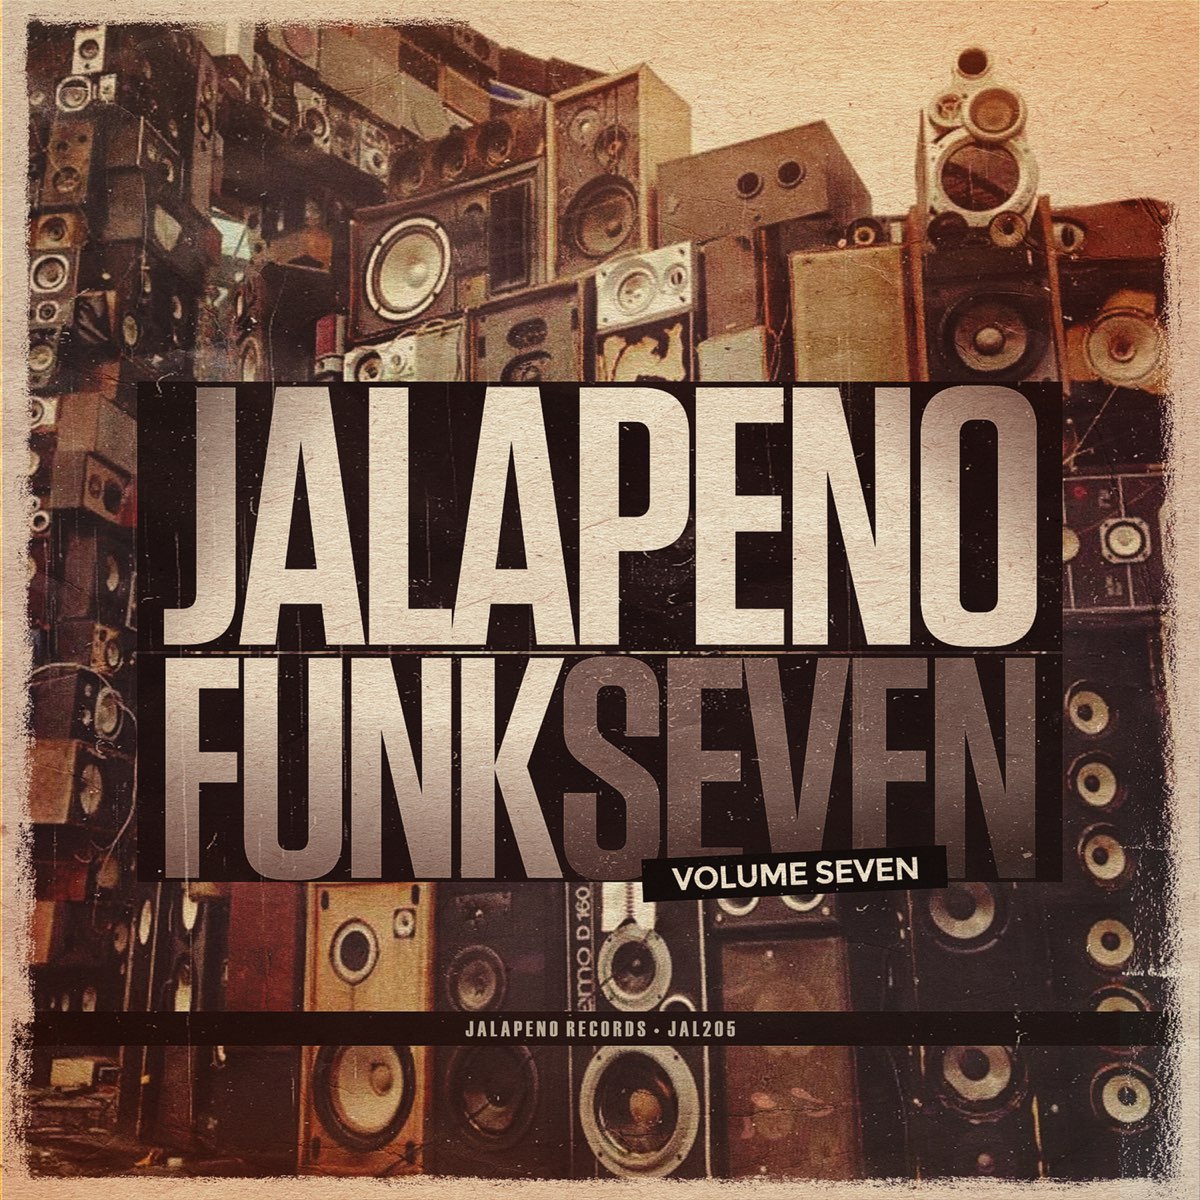 Jalapeno Funk, Vol. 7 - Album by Various Artists - Apple Music